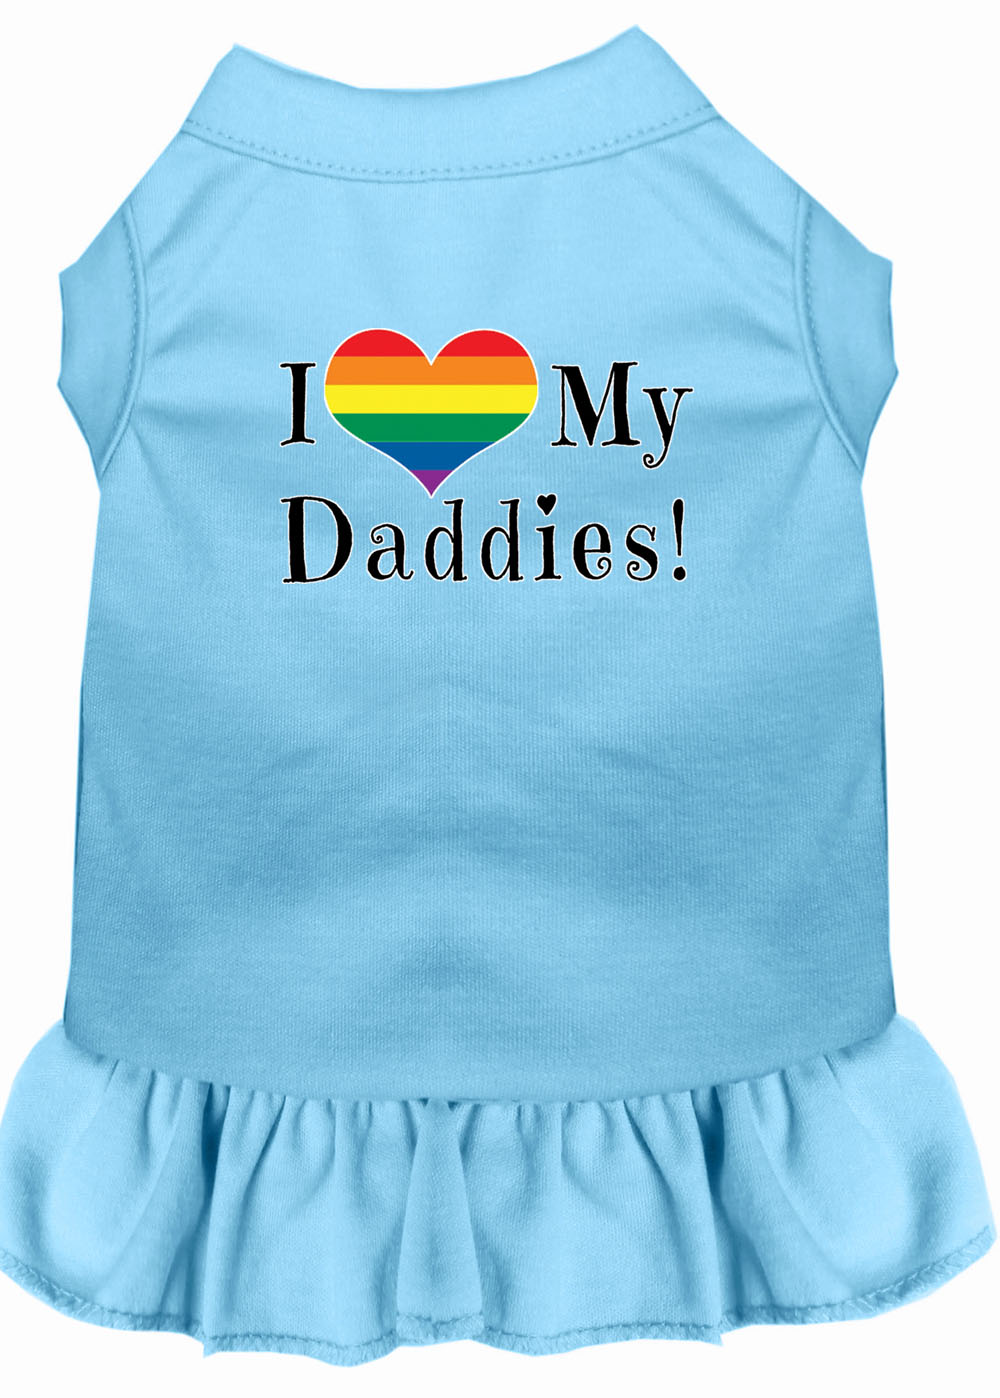 I Heart my Daddies Screen Print Dog Dress Baby Blue Med